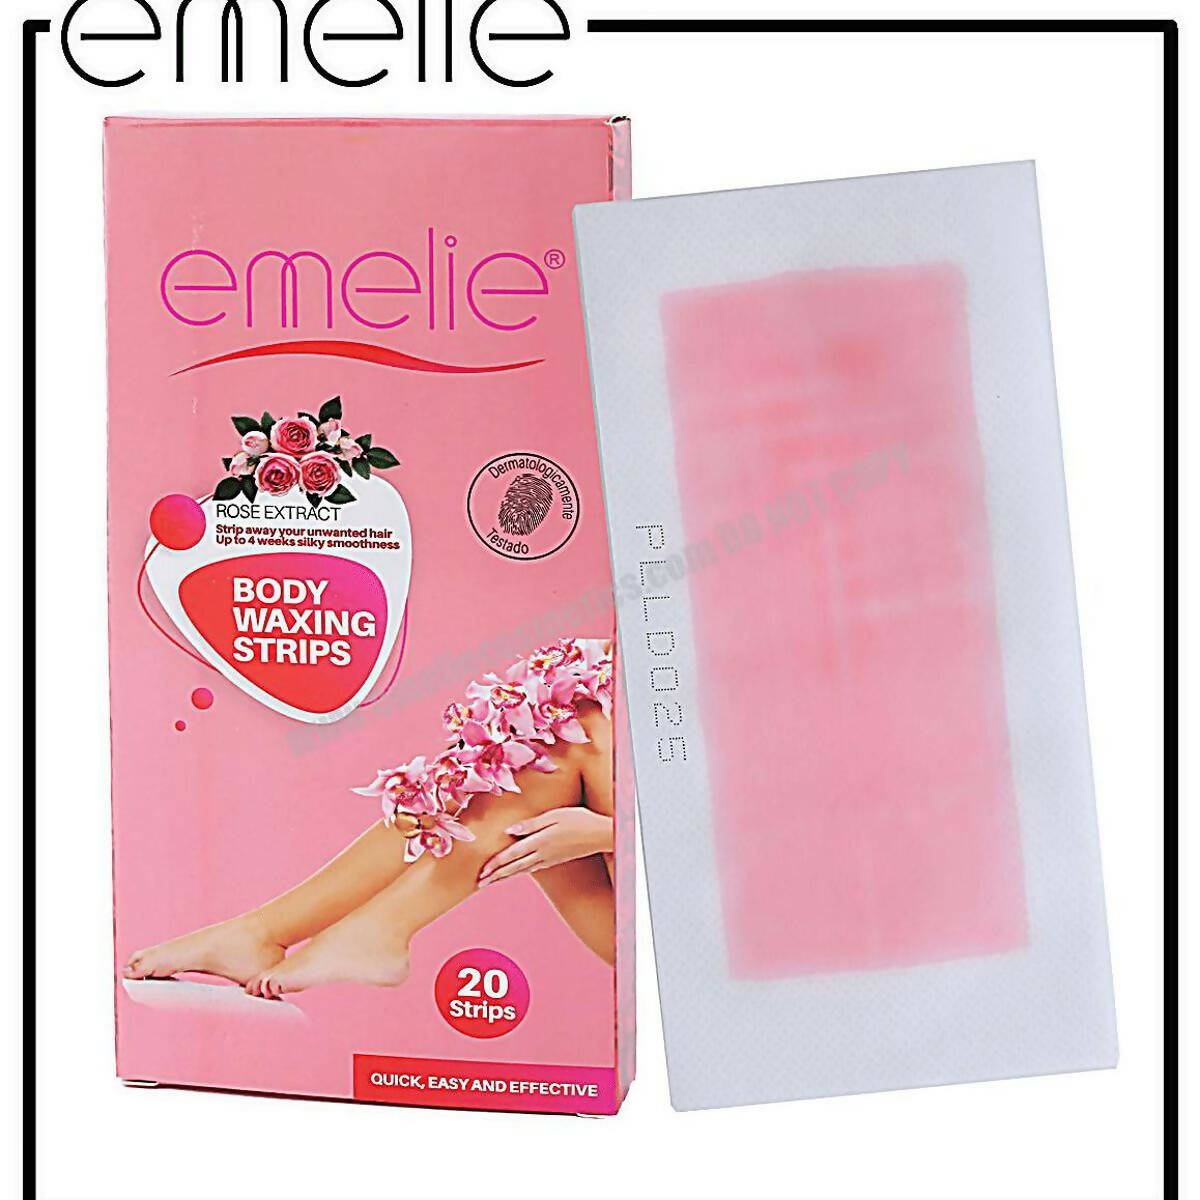 Emelie Cosmetics - Rose Extract Body Waxing Strips